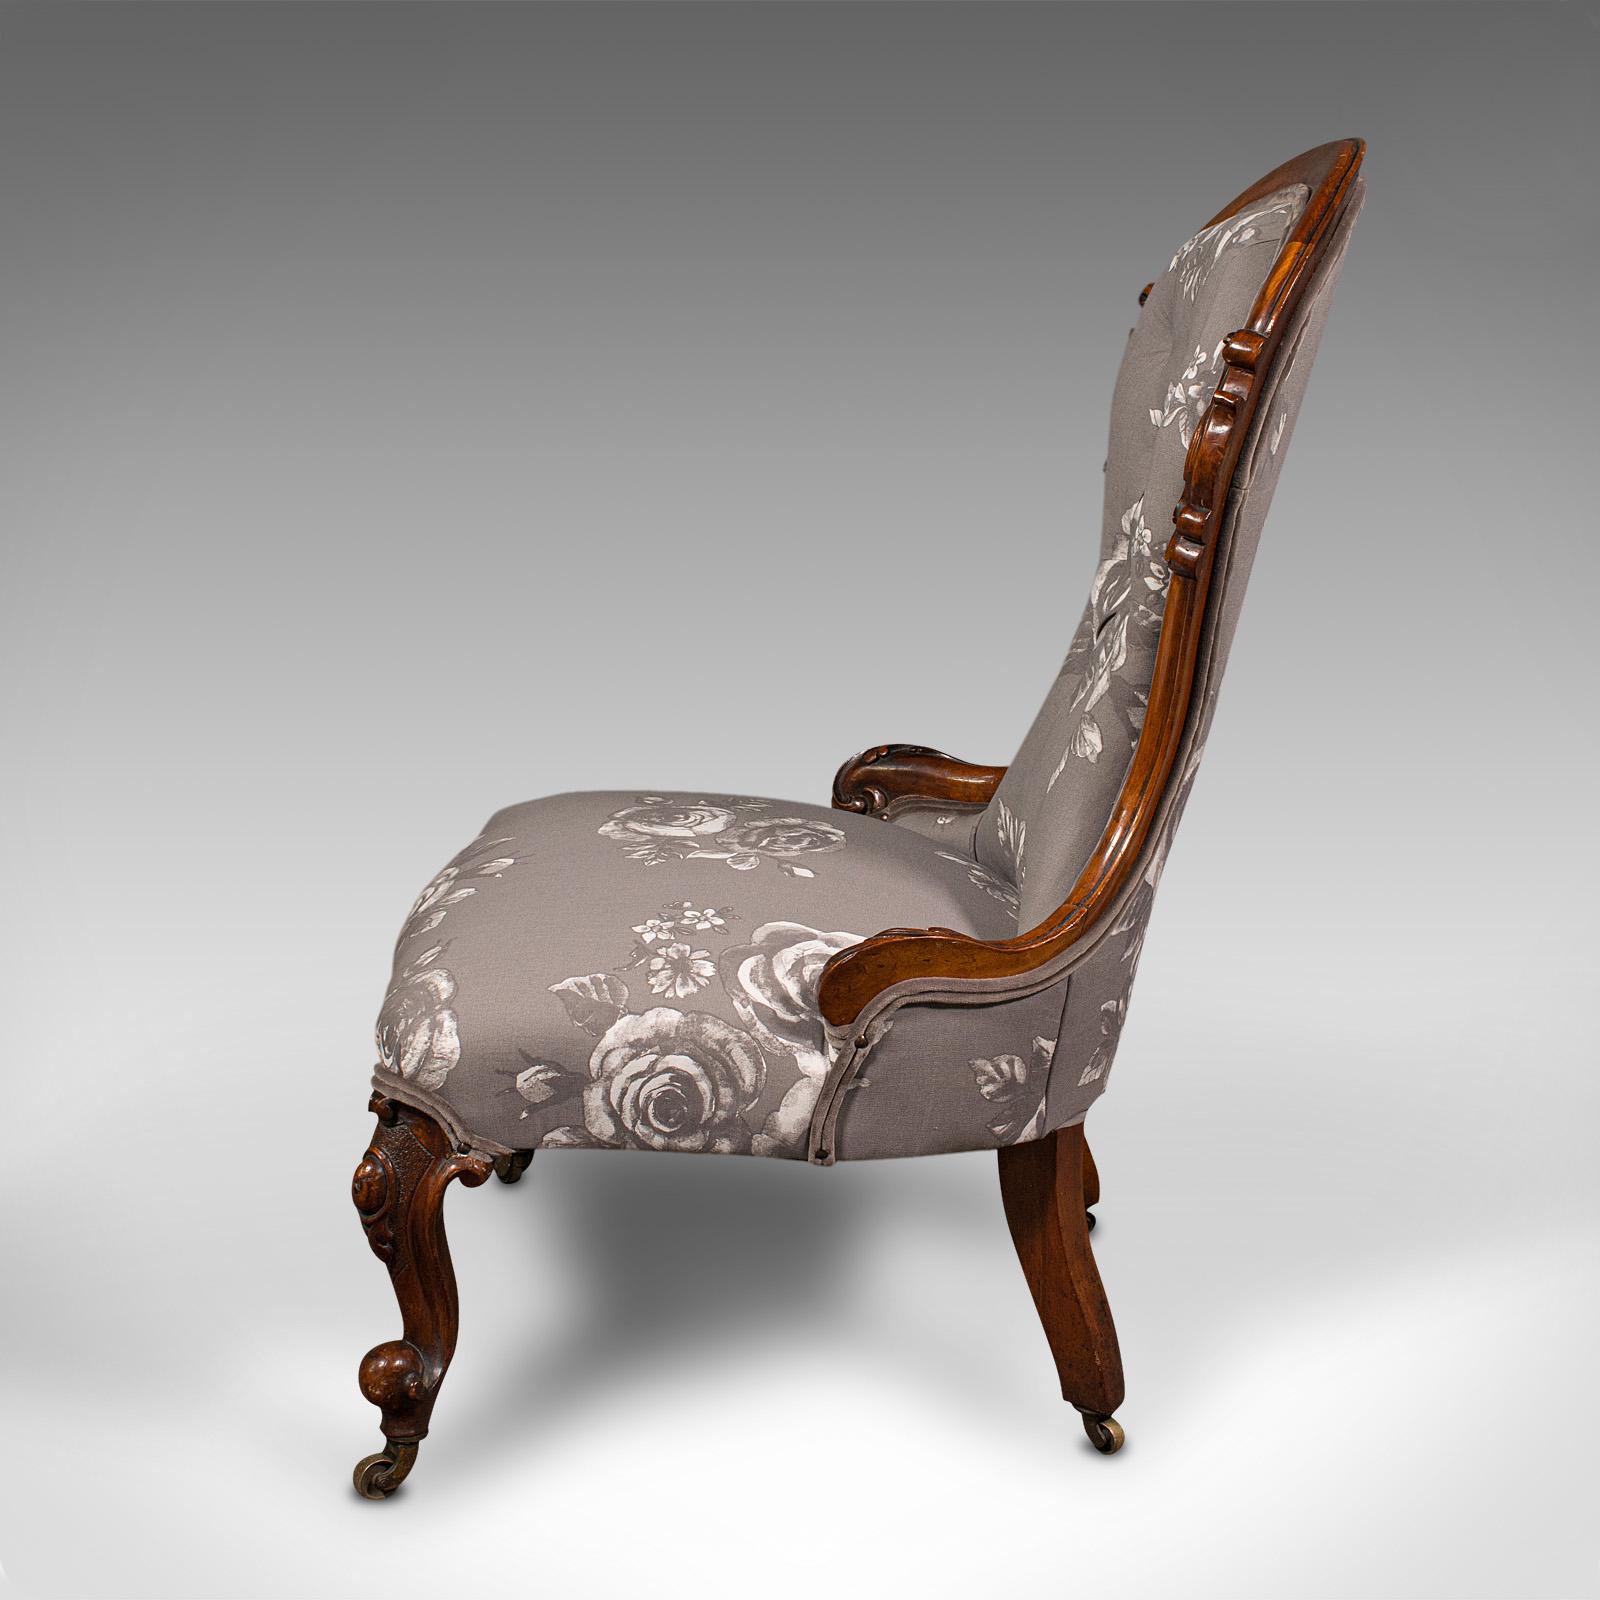 British Antique Button Back Salon Chair English Walnut Spoon Seat Victorian circa 1840 For Sale